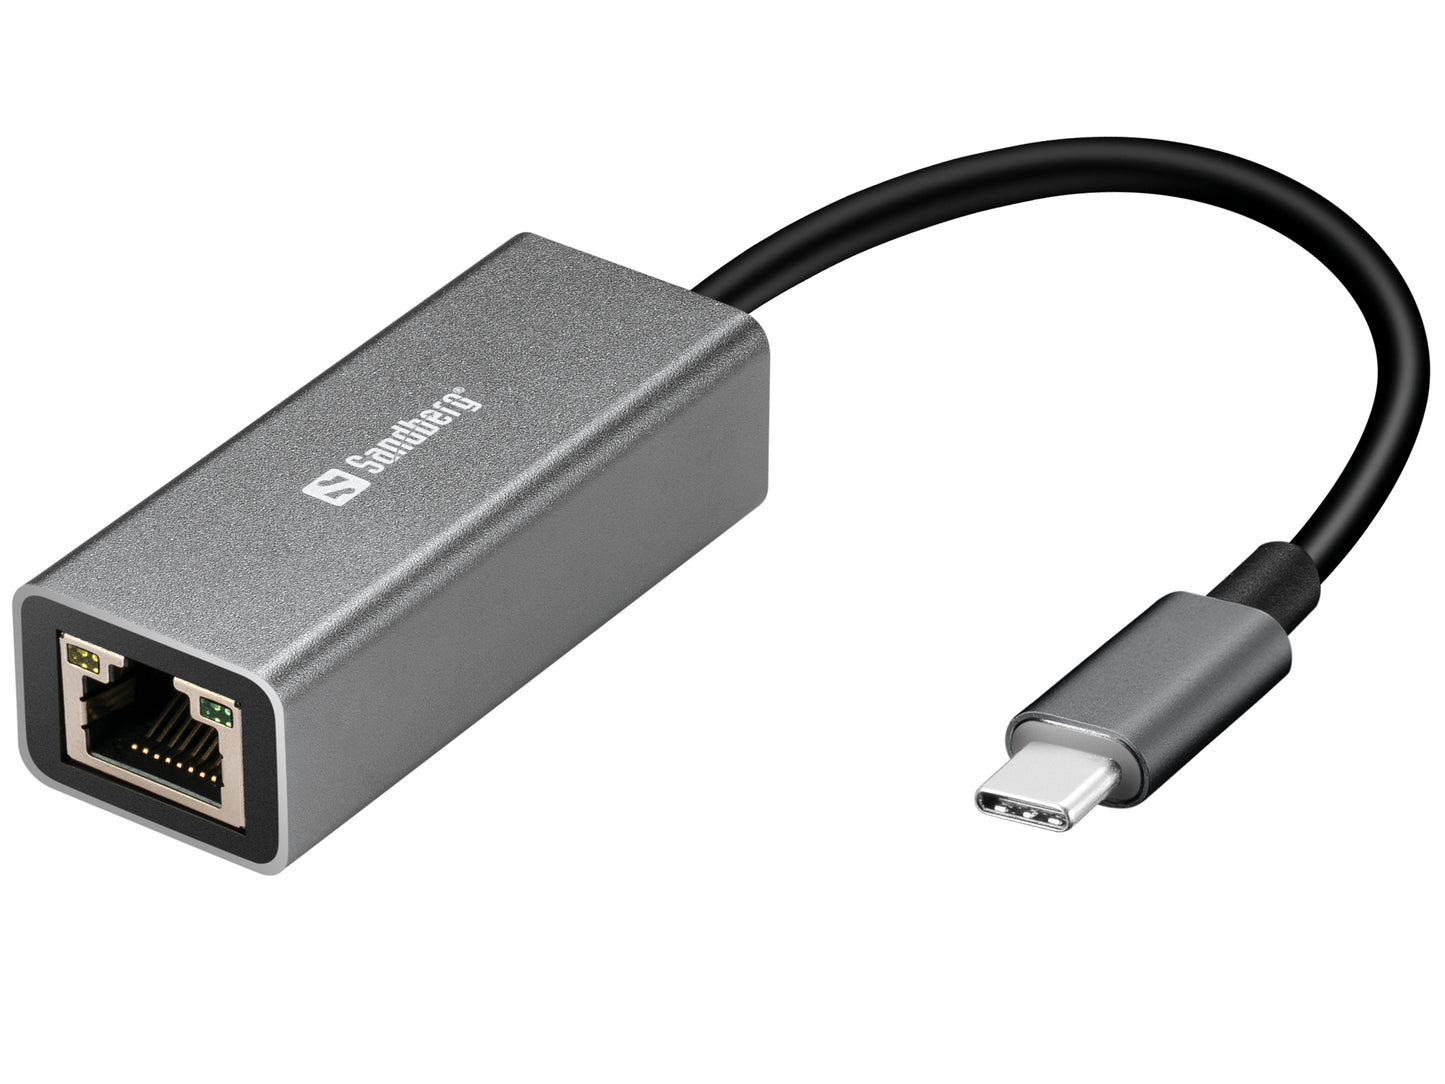 USB-C Gigabitu Tīkla Adapteris, Alumīnija - Sandberg 136-04